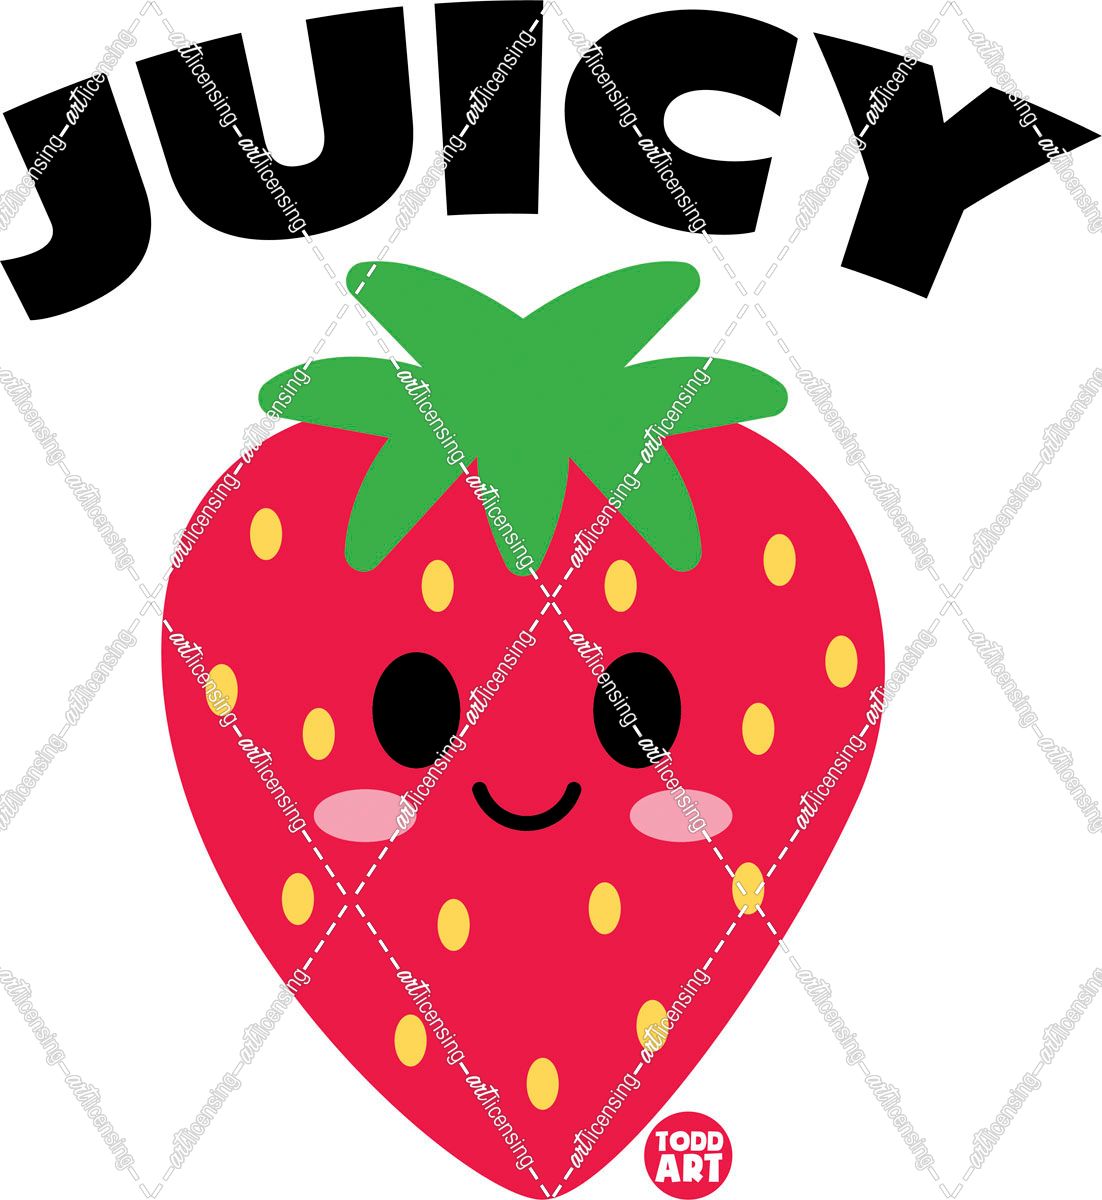 Juicy Strawberry